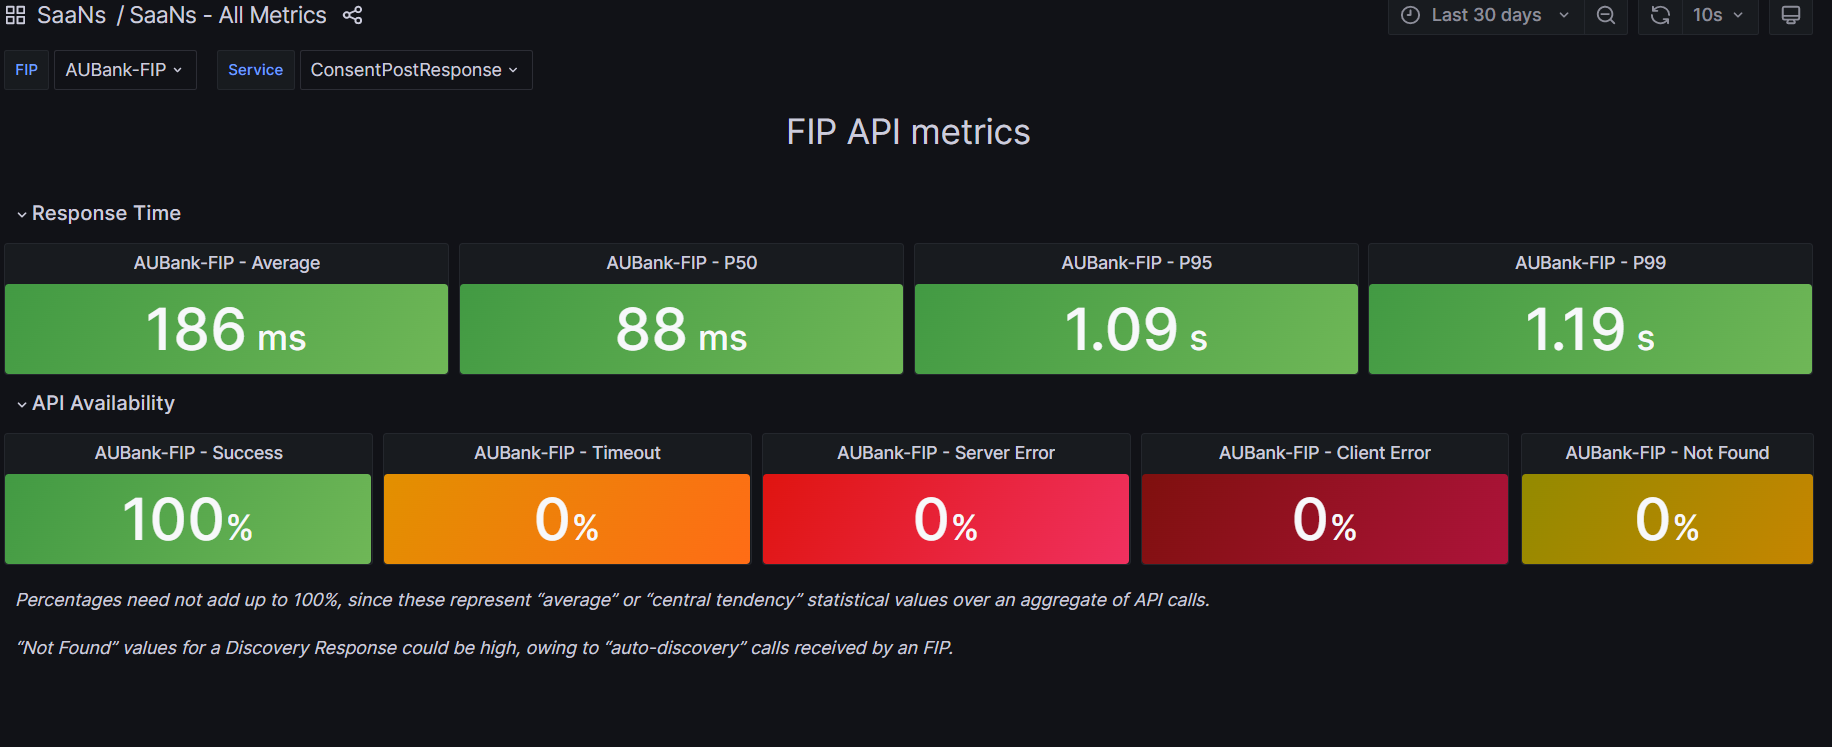 fip_api_metrics